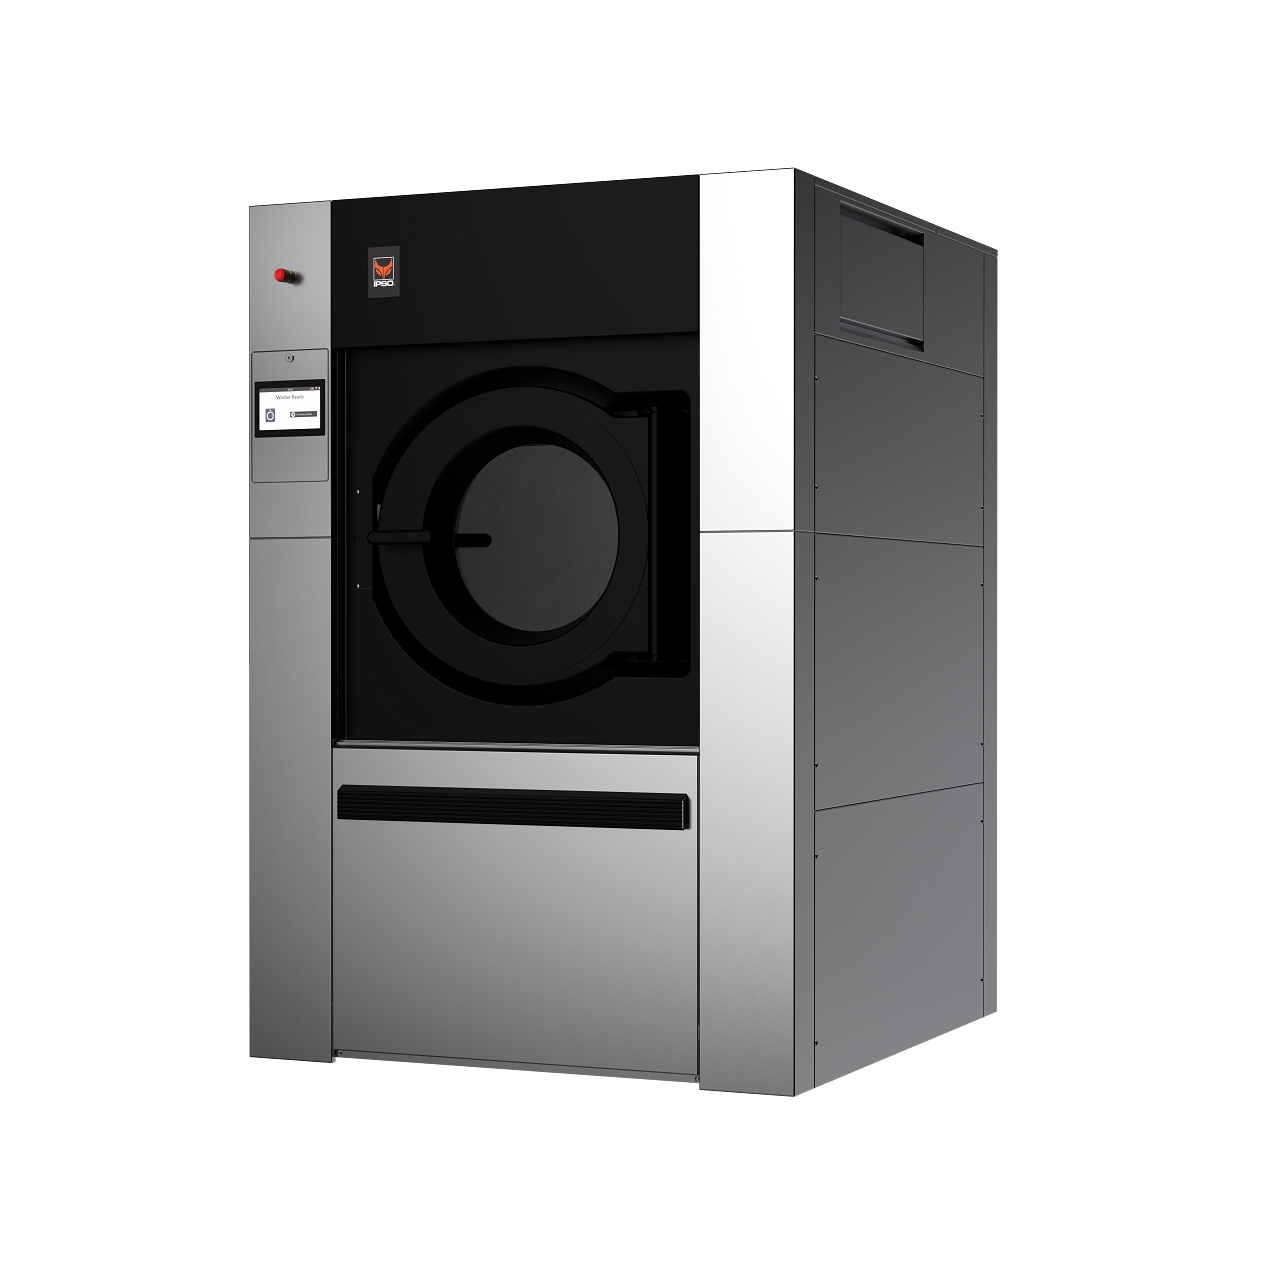 En team nikkel kennisgeving Industriële wasmachine IPSO IY350-450-600 | LDL Laundry